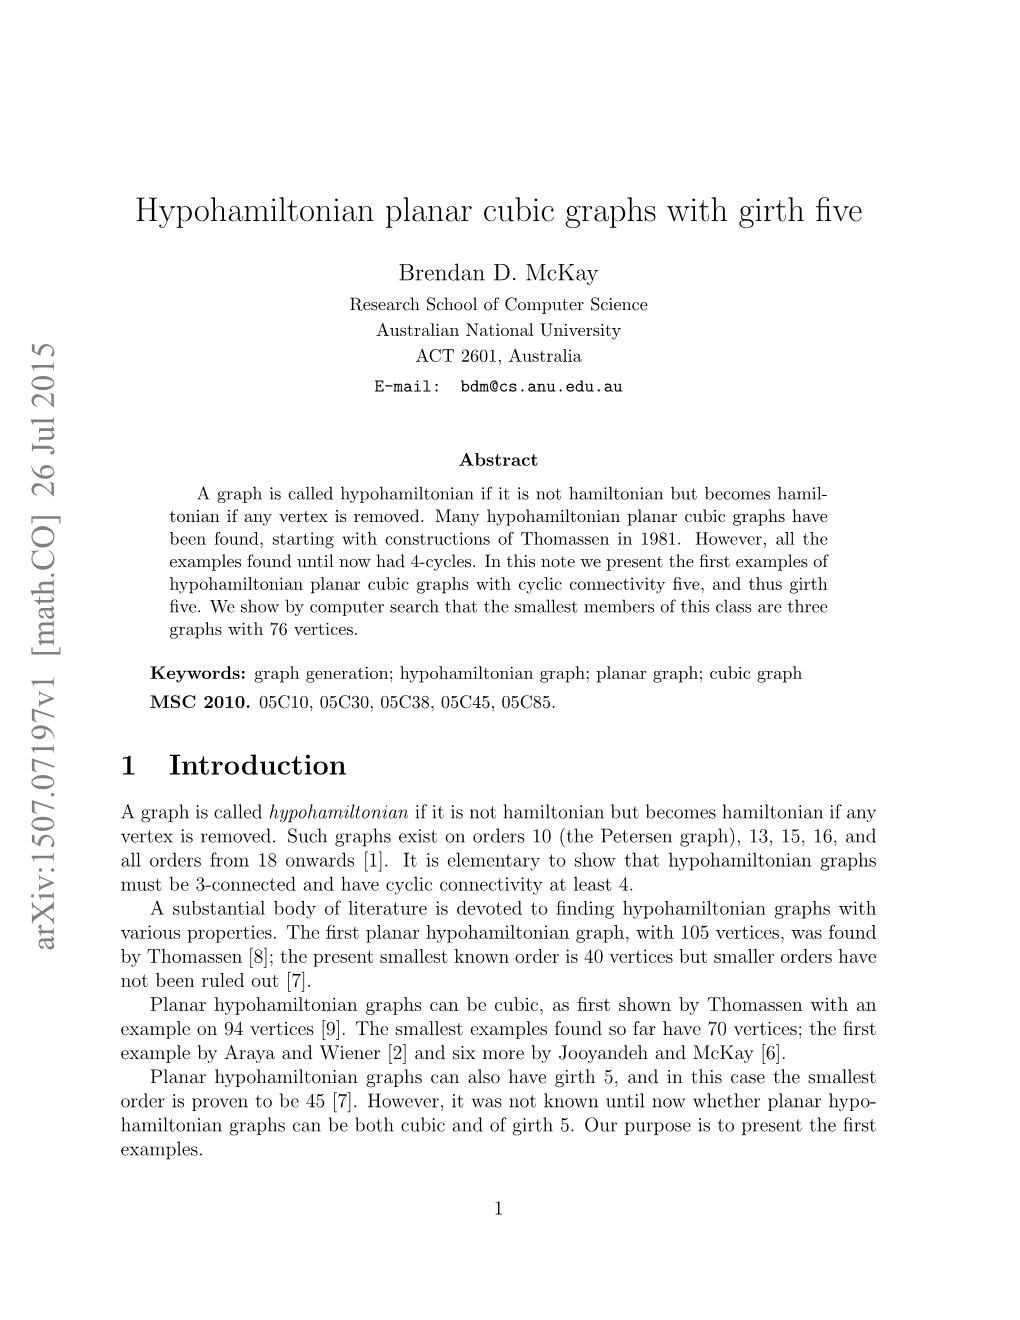 Hypohamiltonian Planar Cubic Graphs with Girth Five Arxiv:1507.07197V1